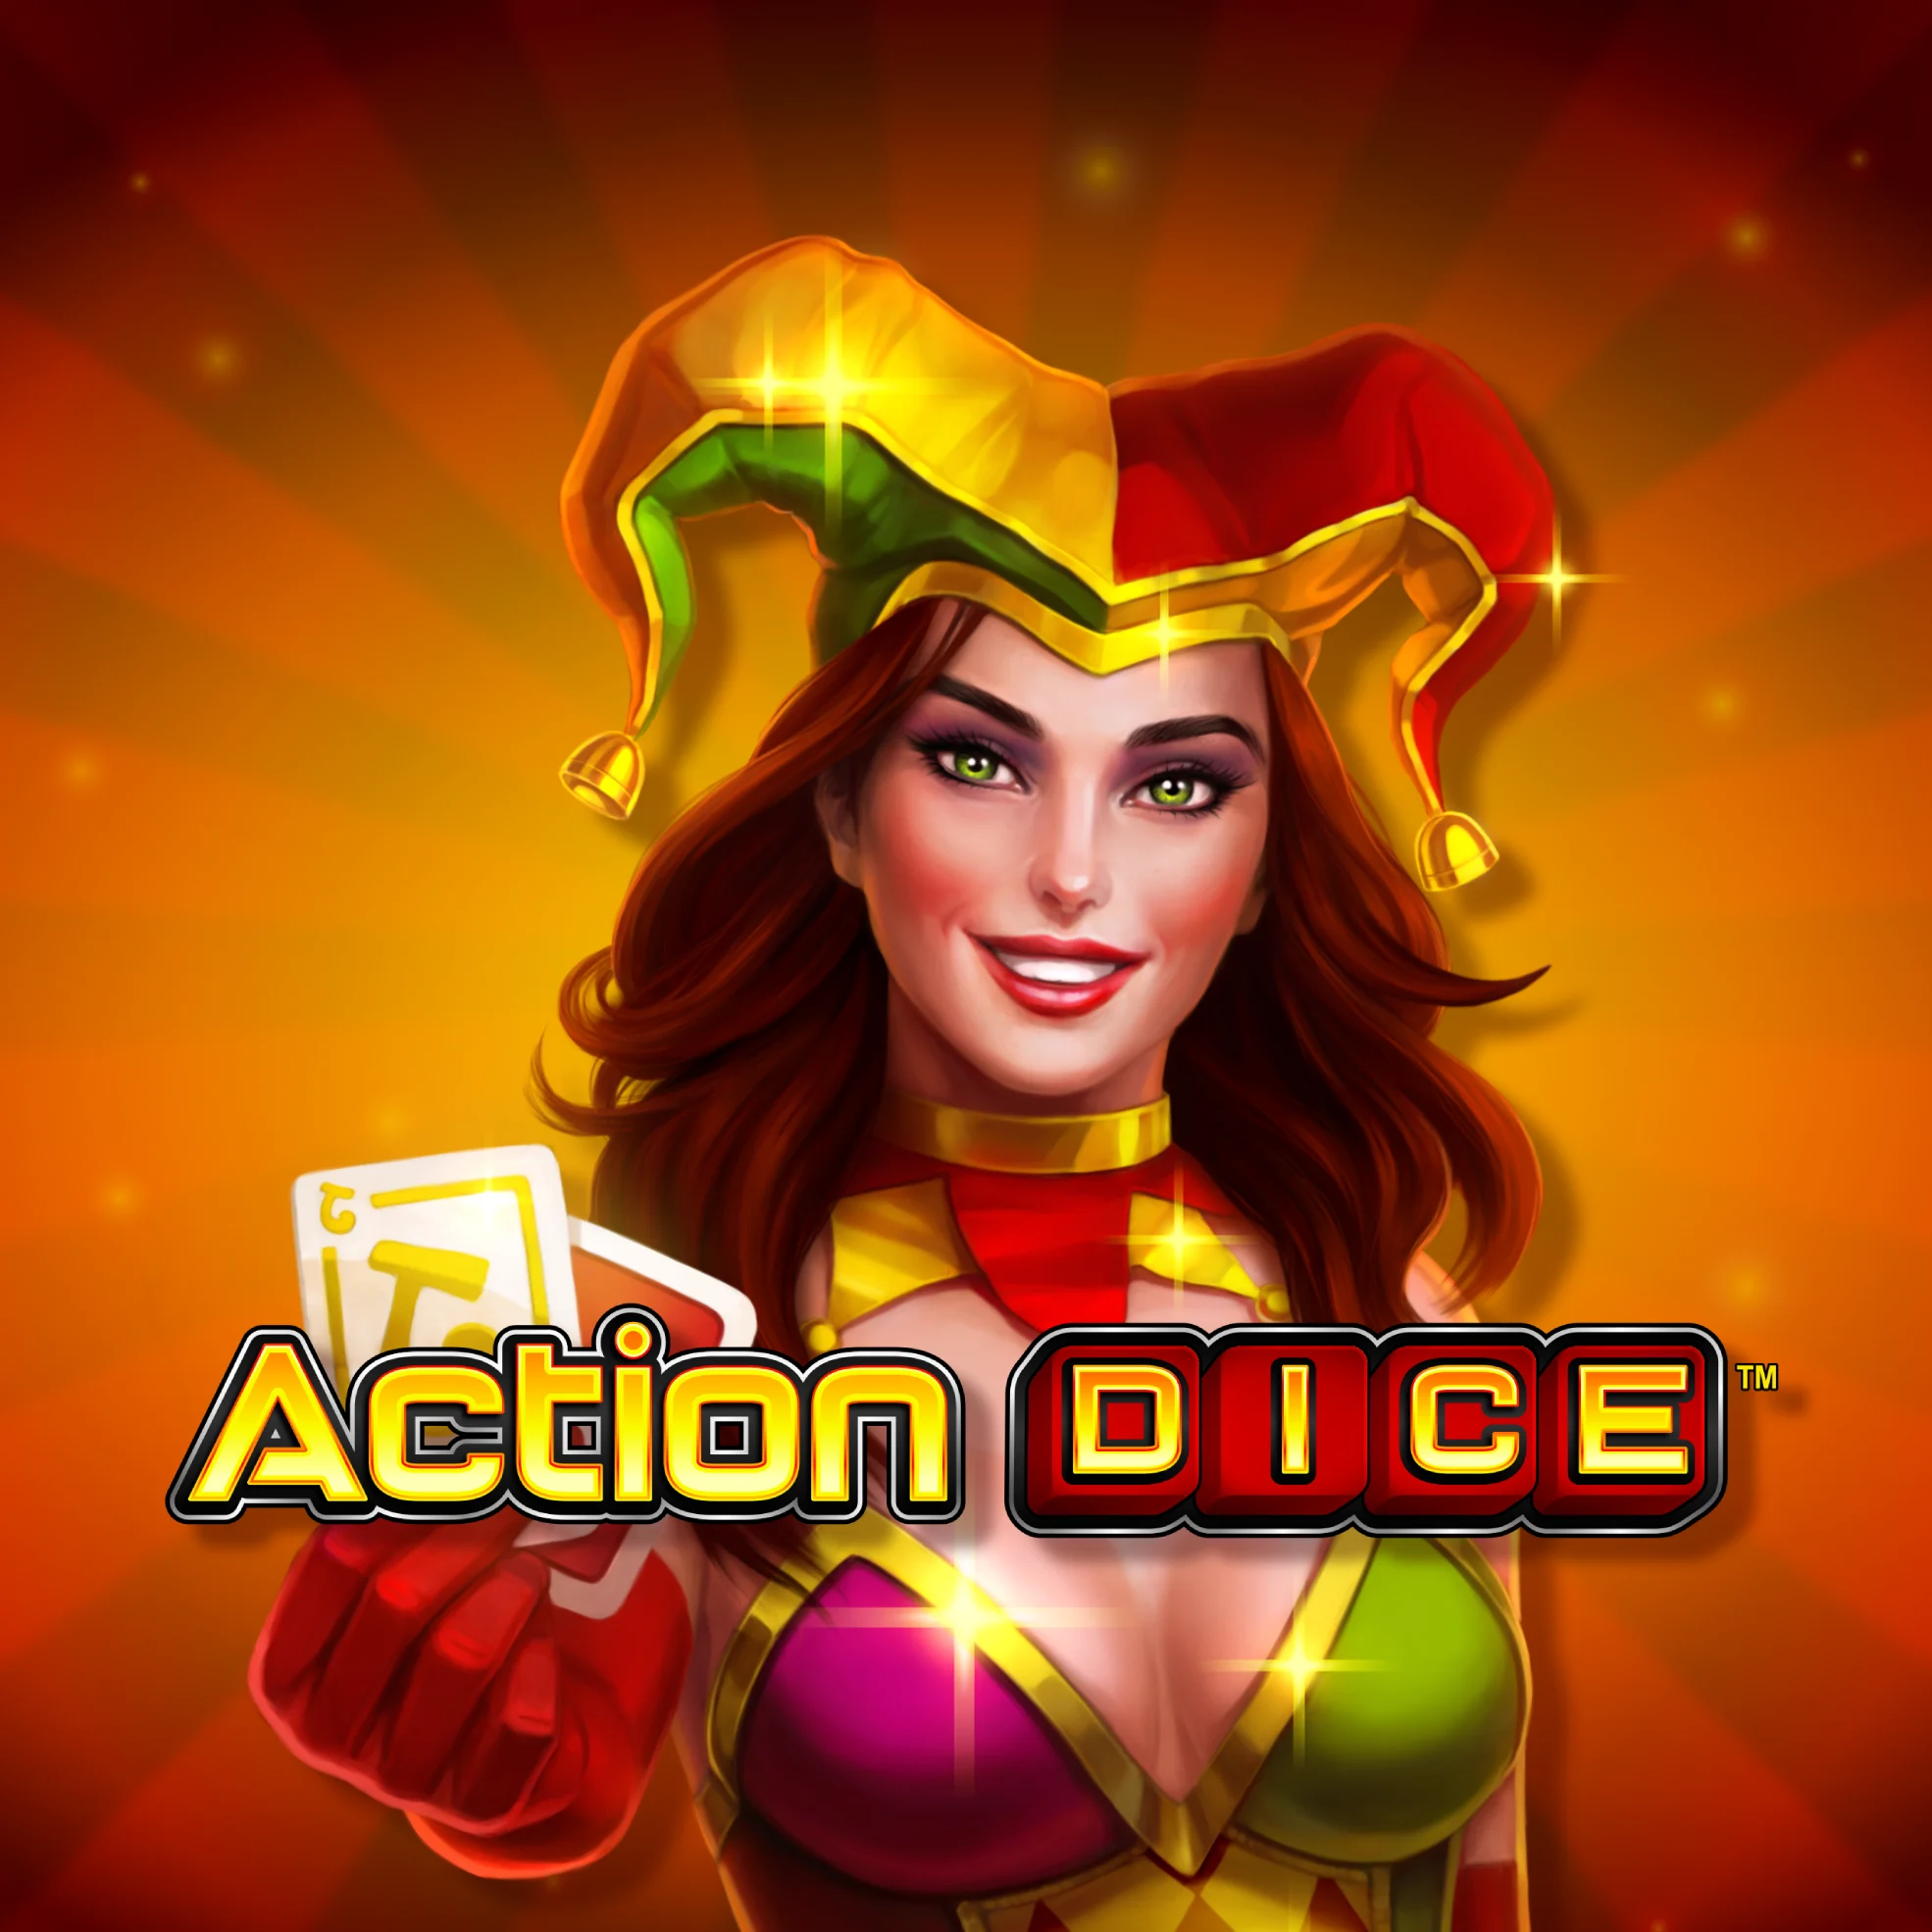 Play Action Dice on Starcasinodice online casino